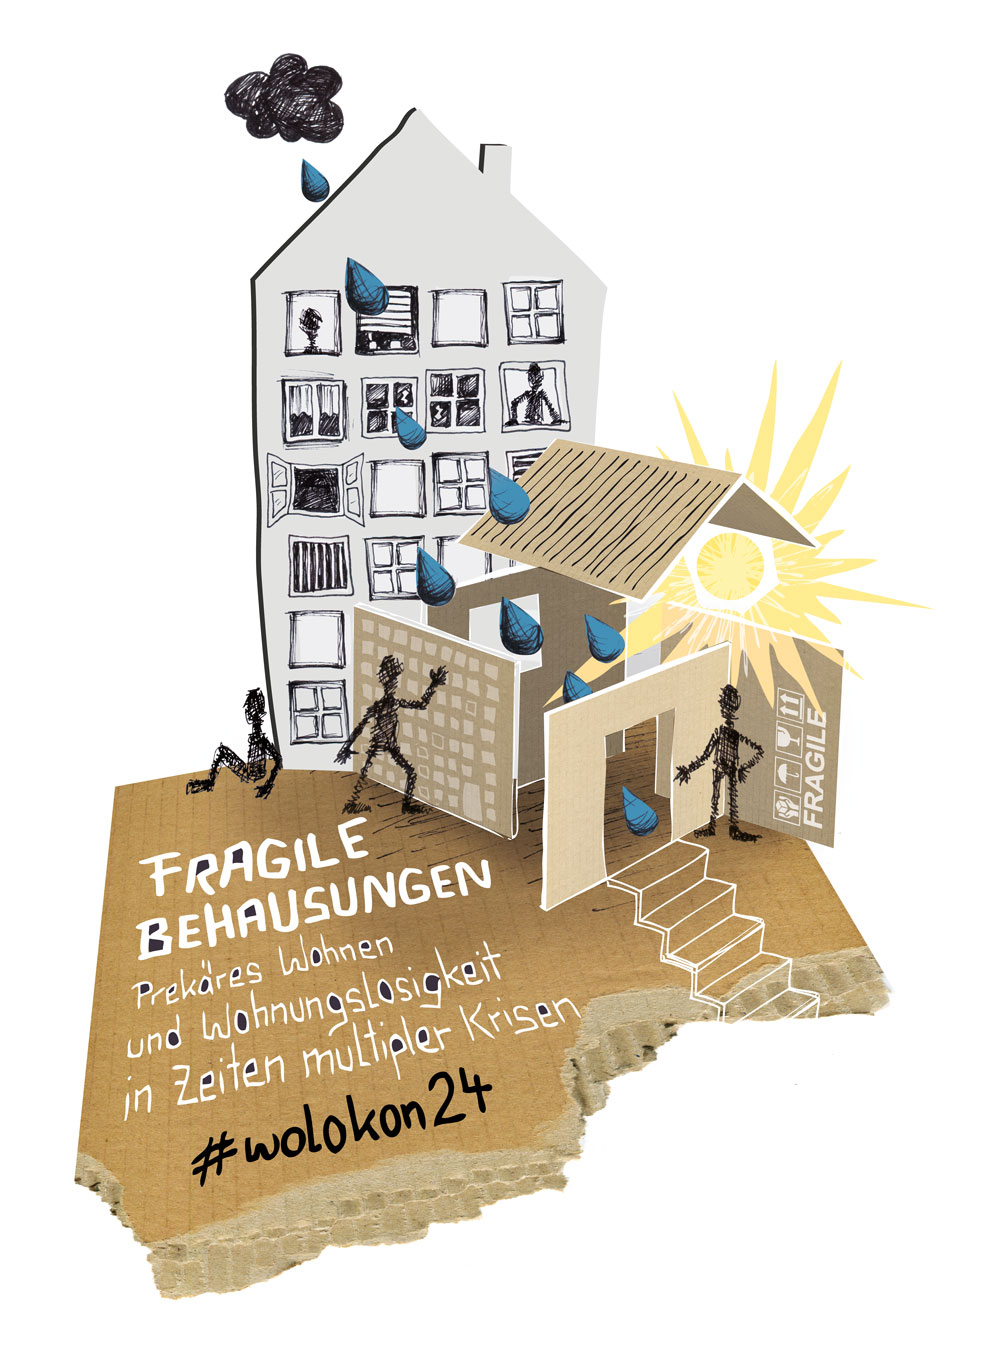 Illustration aus dem ATELJÖ, Thema: Fragile Behausungen, TH Nürnberg